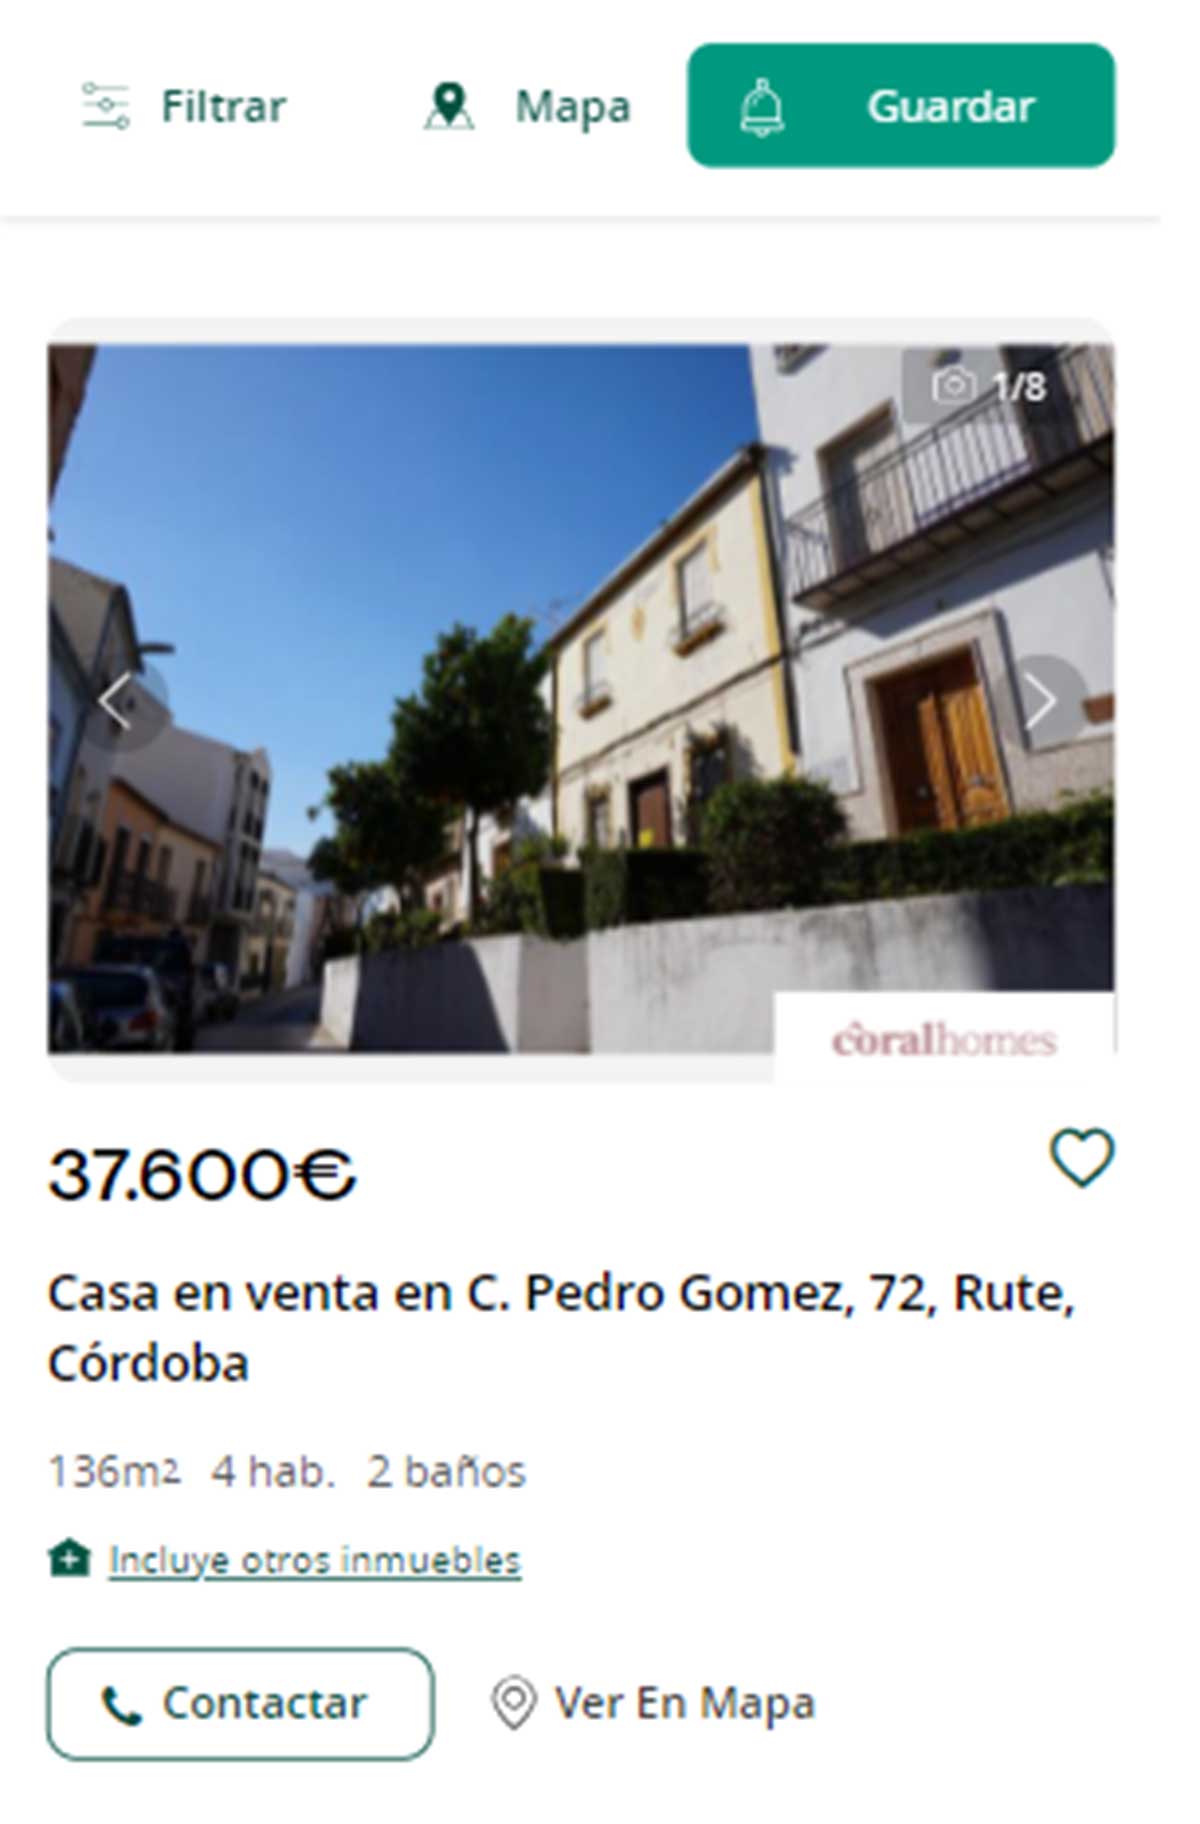 Piso a la venta en Córdoba por 37.000 euros